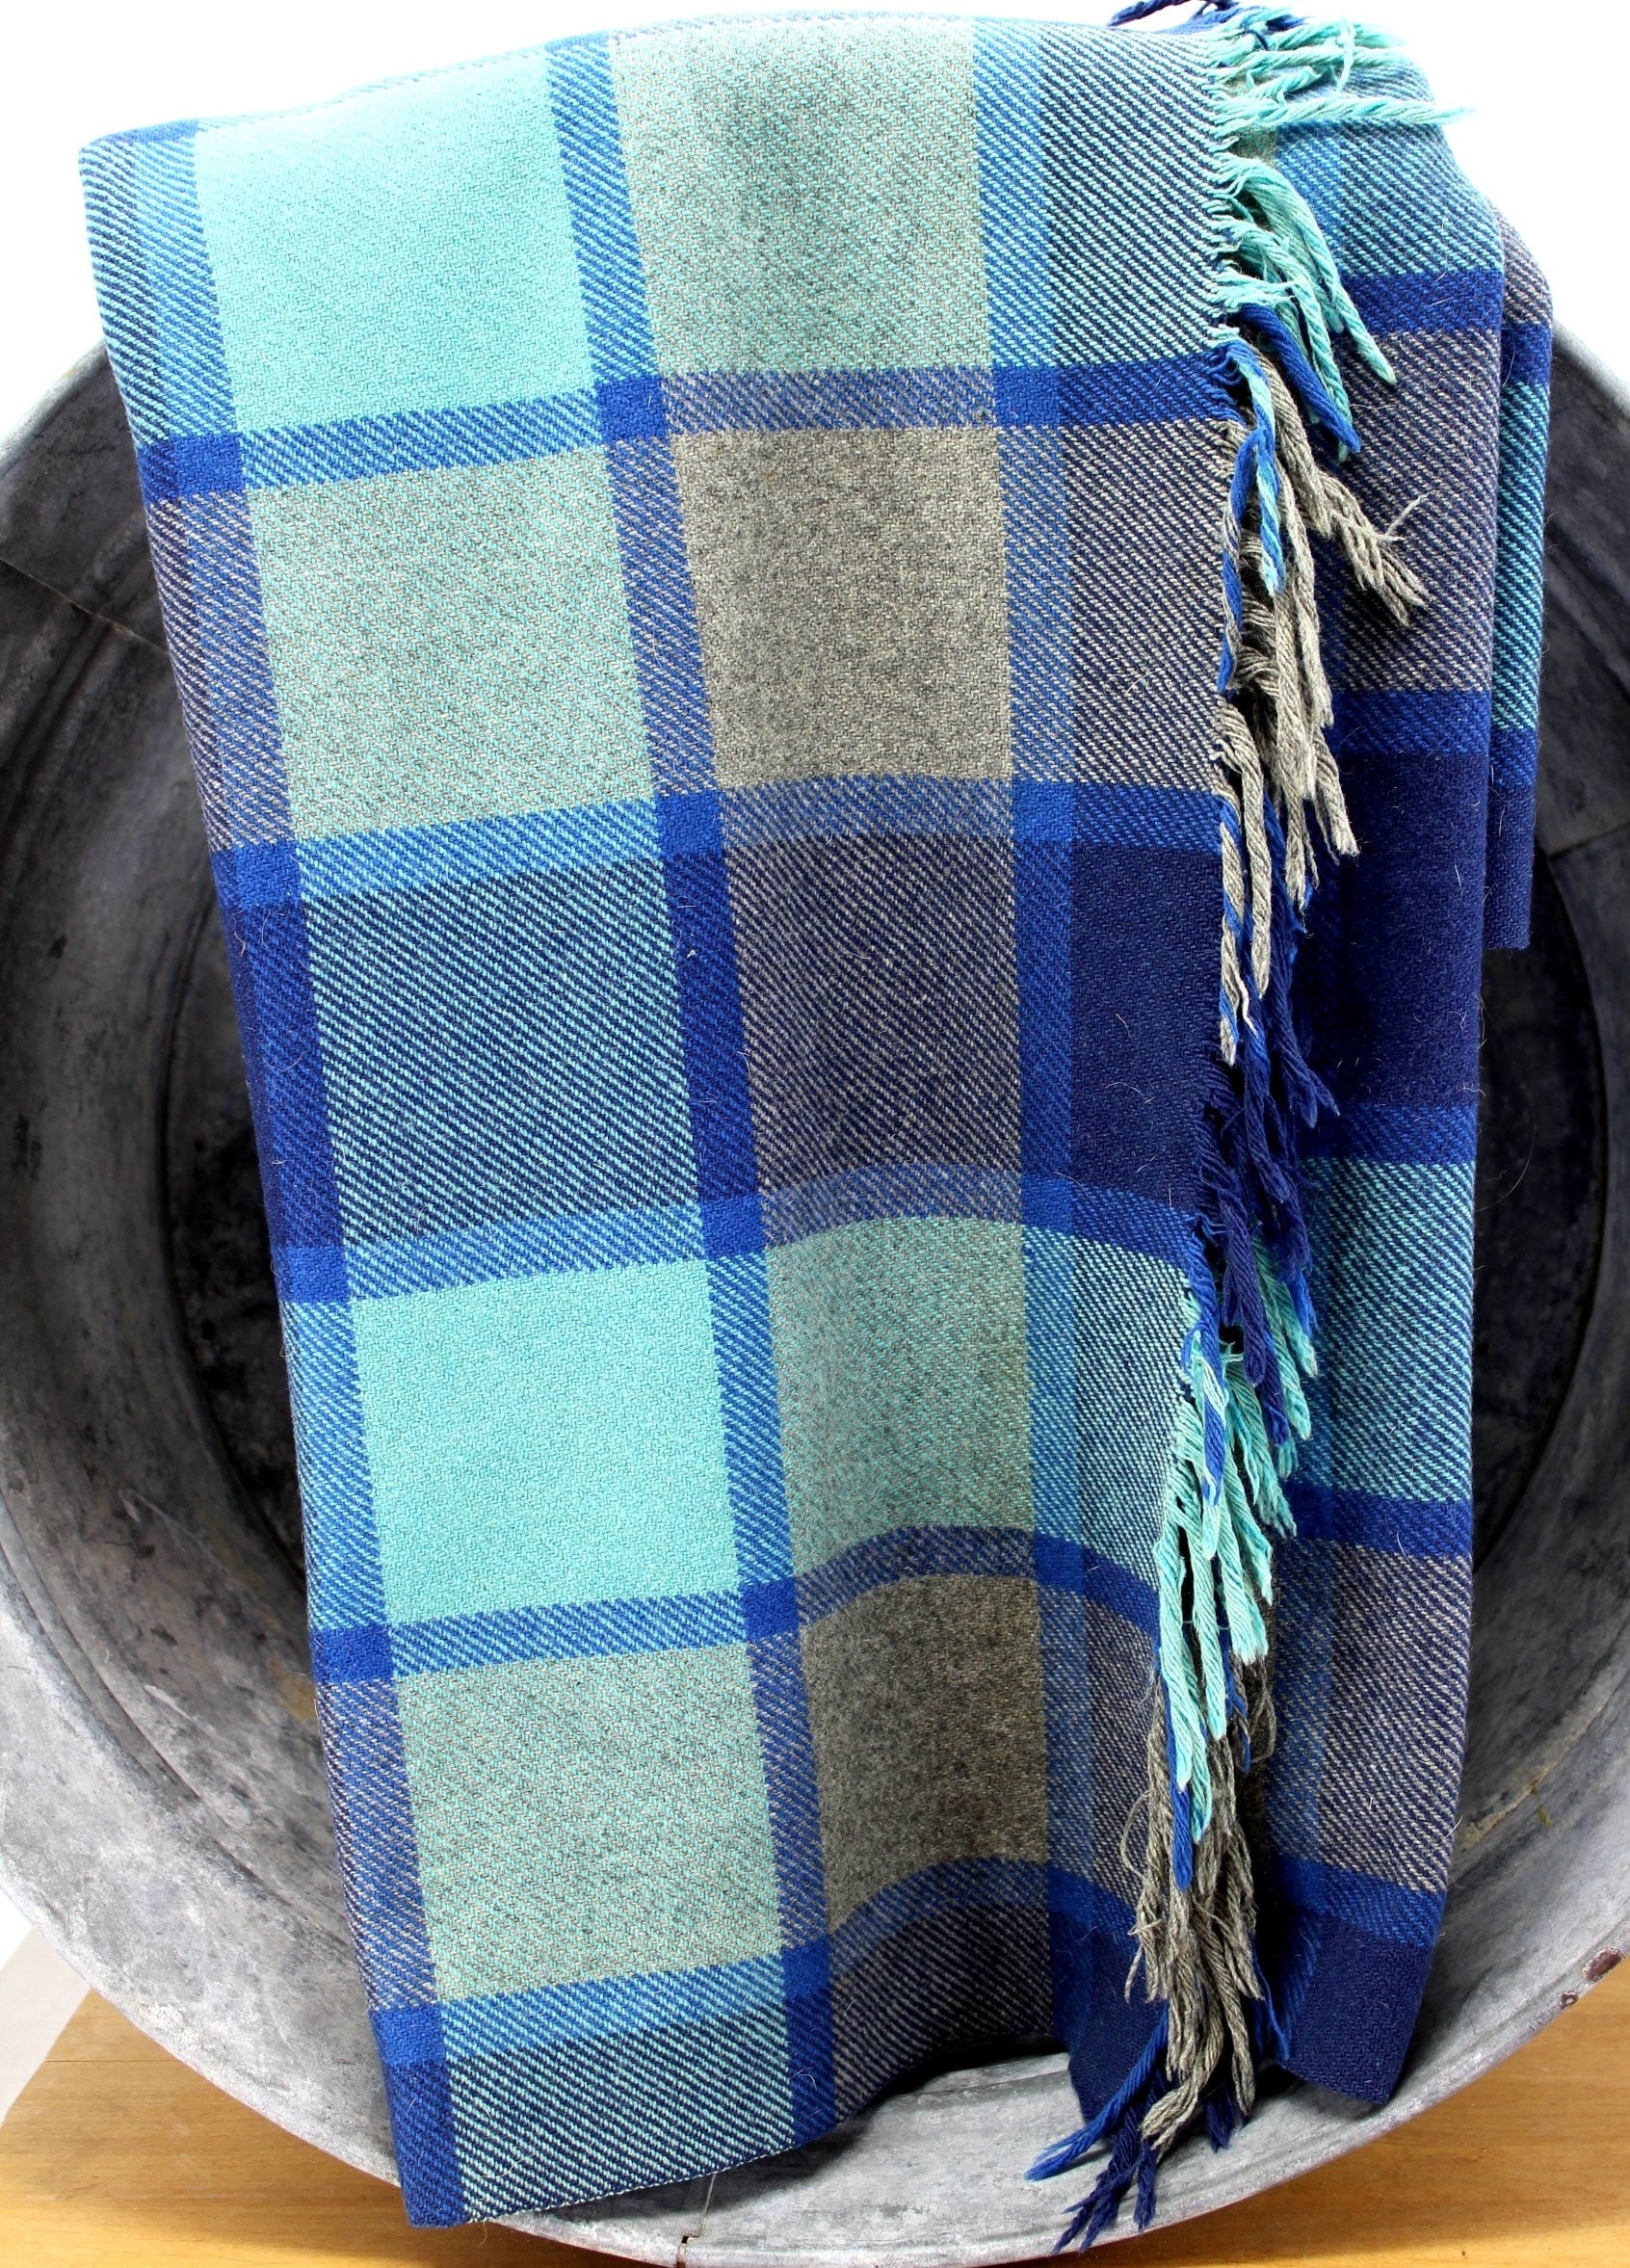 Unbranded Throw Blanket - Wool Blend Blue Aquamarine Plaid ~ Large 53" X 58" travel stadium blanket